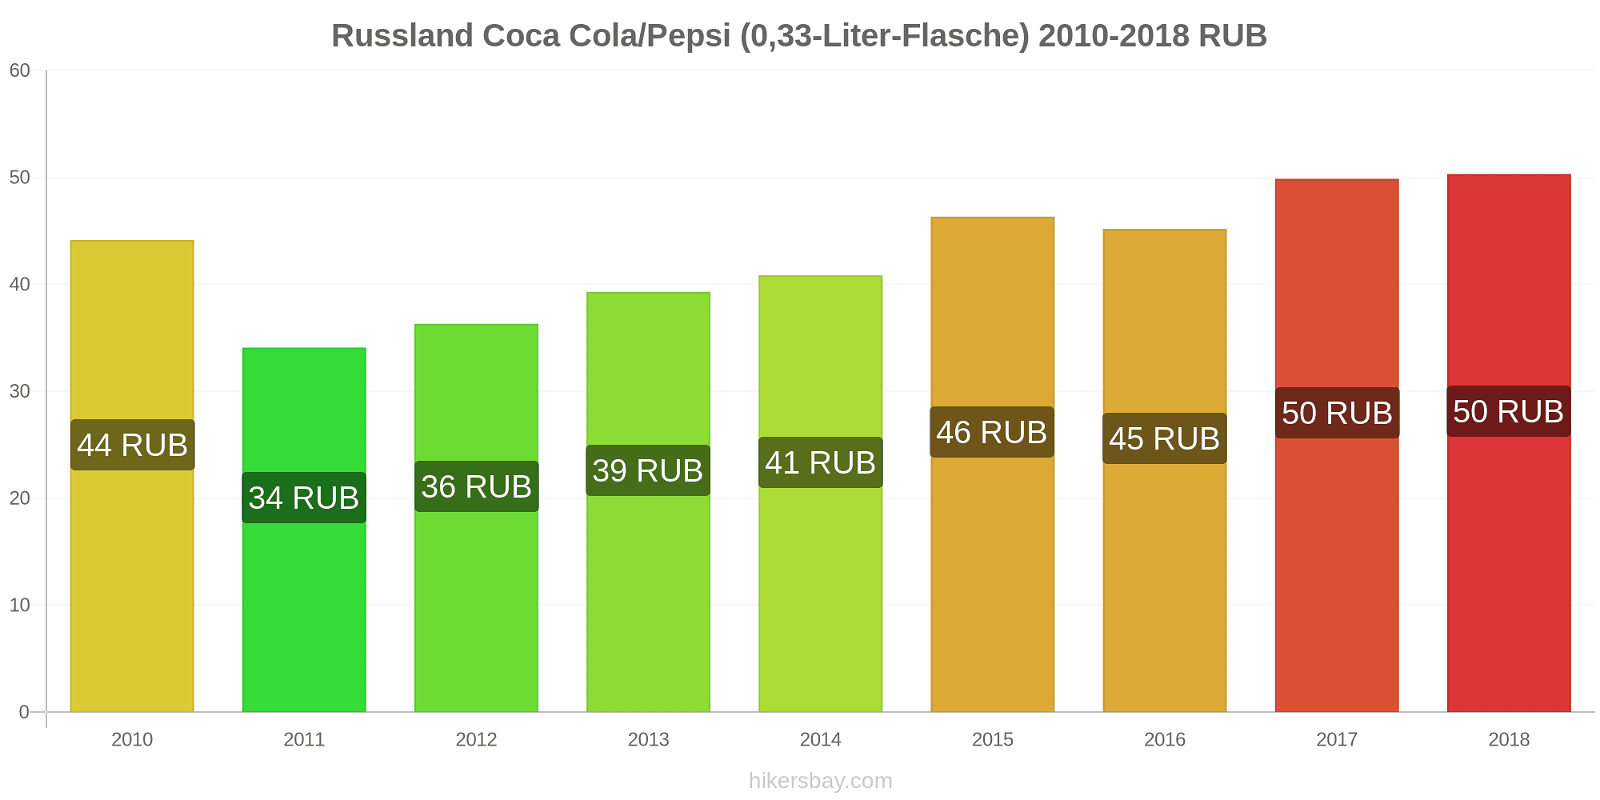 Russland Preisänderungen Coke/Pepsi (0,33-Liter-Flasche) hikersbay.com